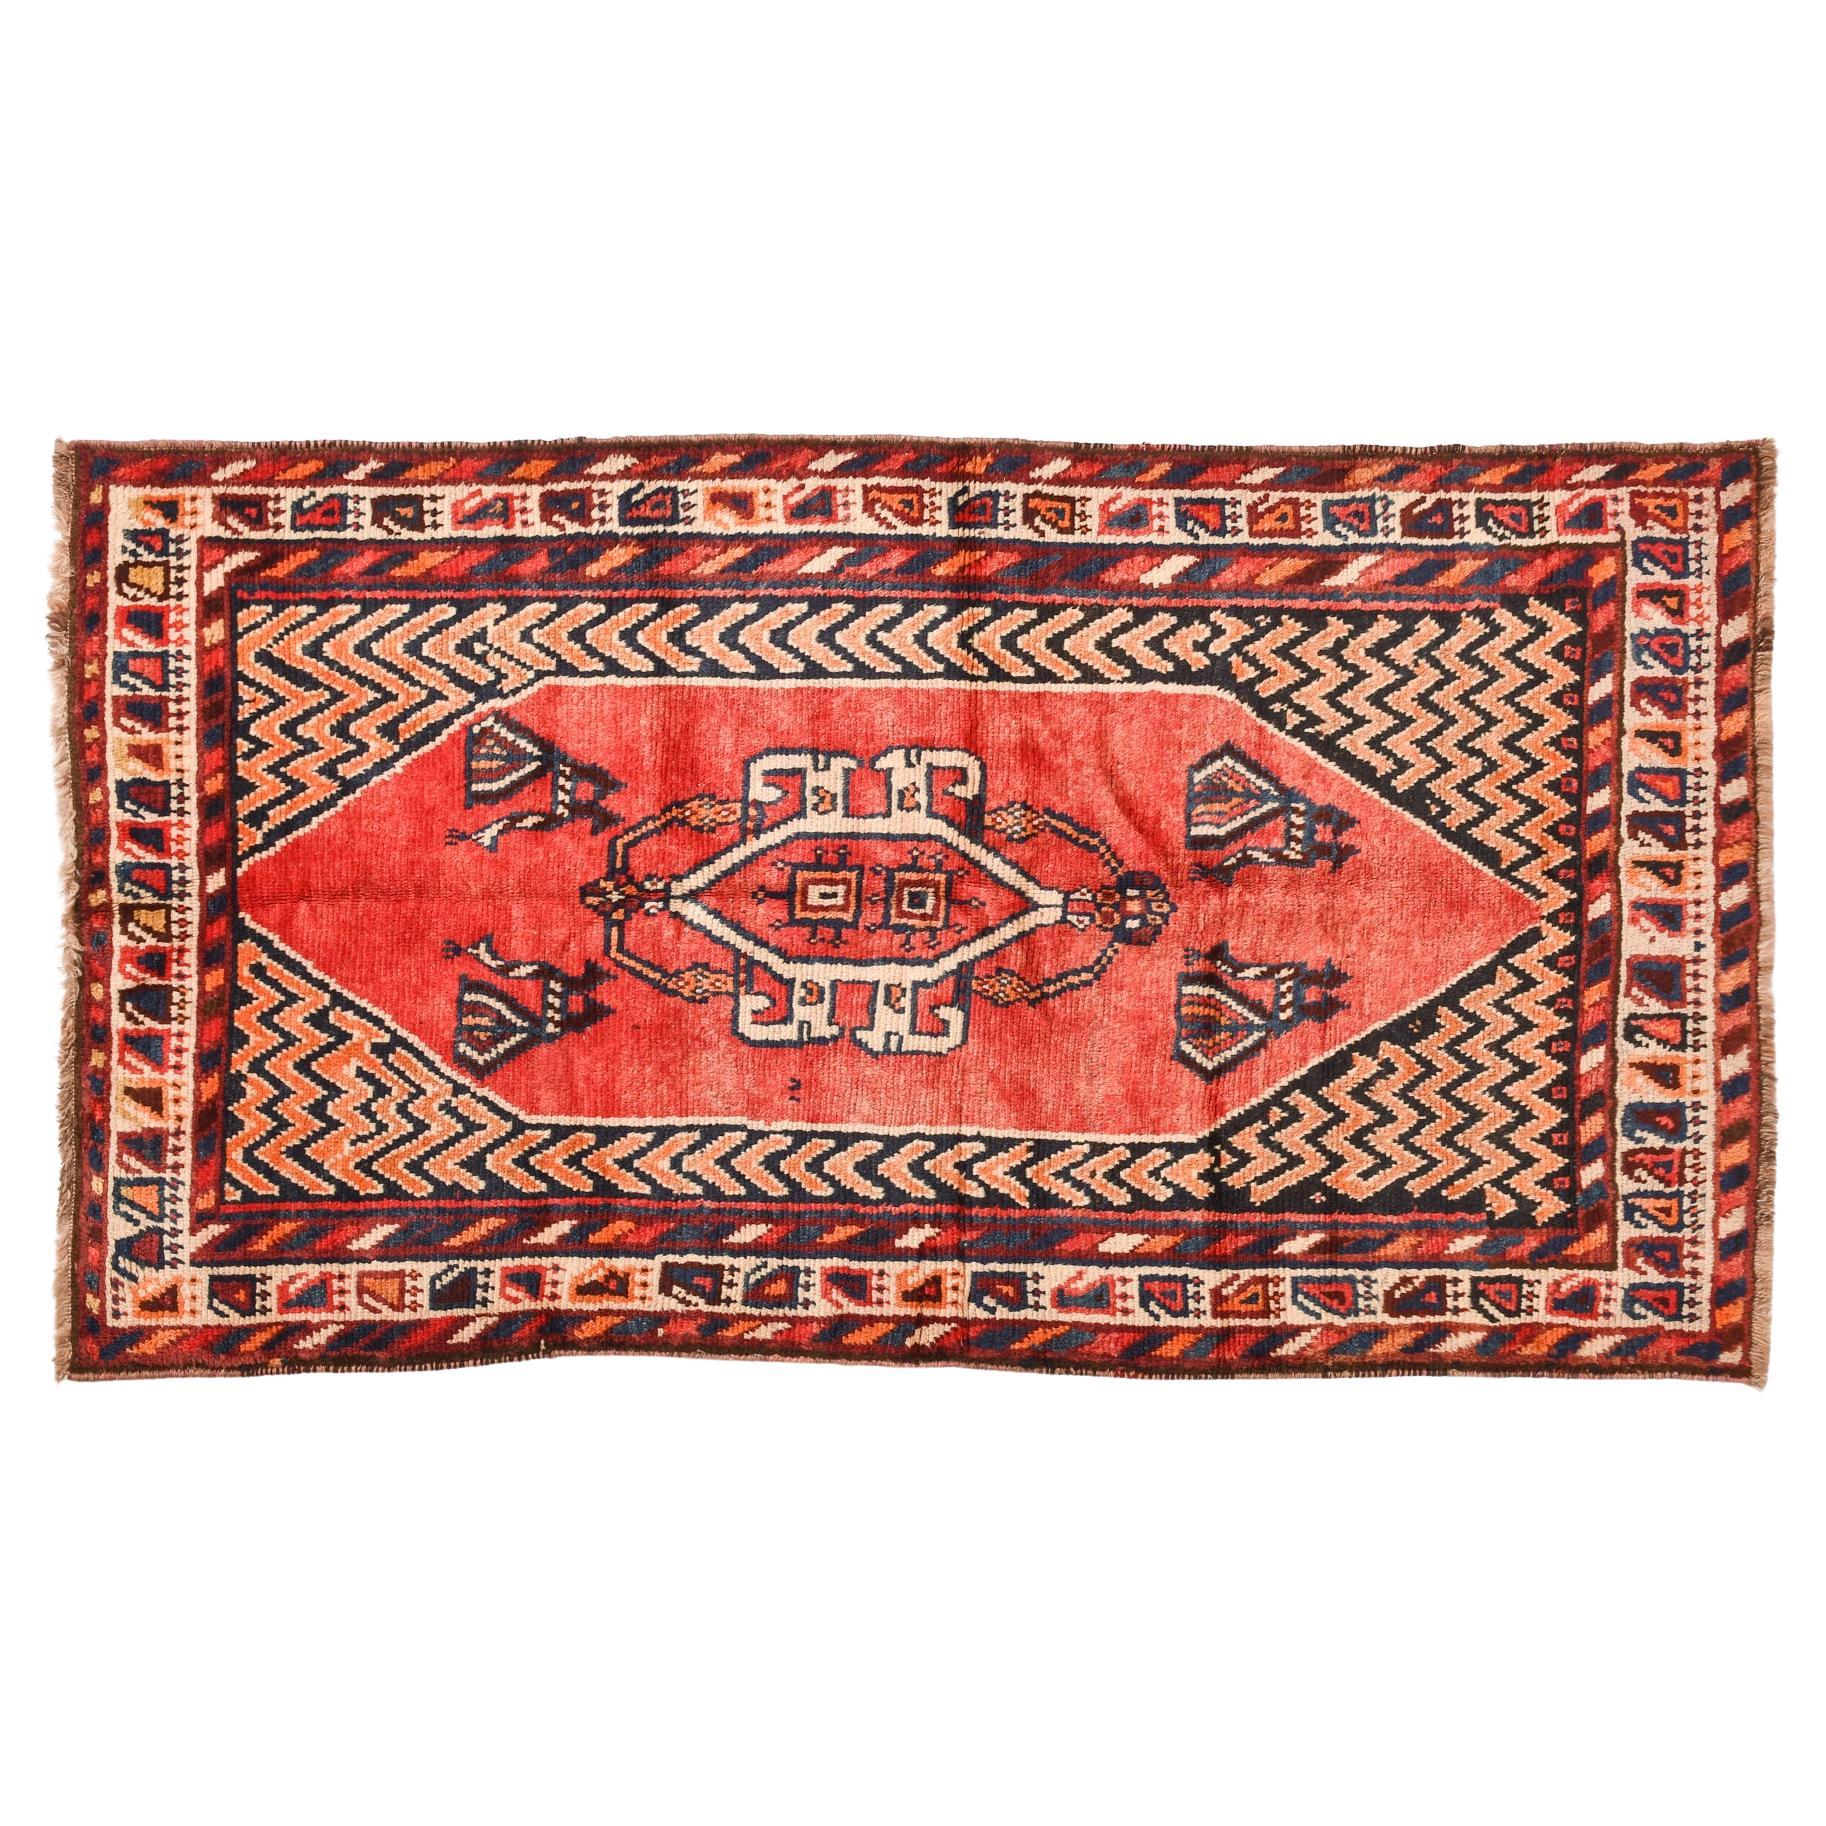 Vintage Nomadic Carpet with Peacocks